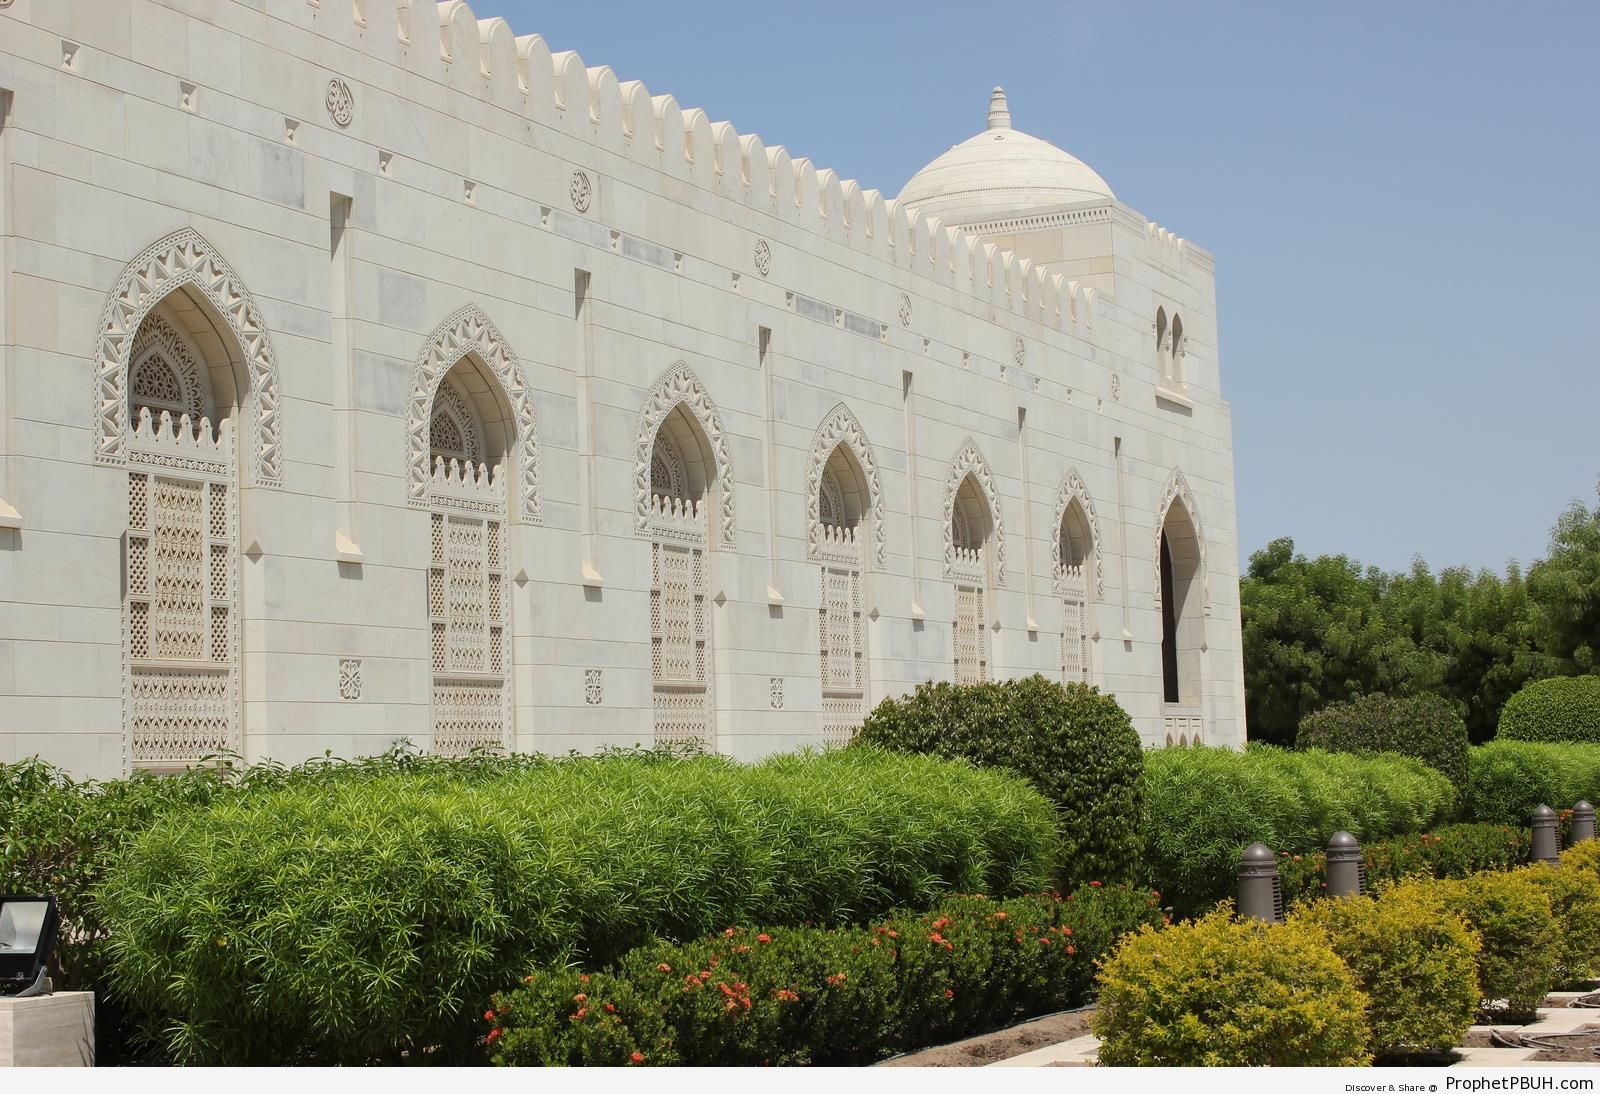 Outside Sultan Qaboos Grand Mosque in Muscat, Oman - Islamic Architecture -Picture